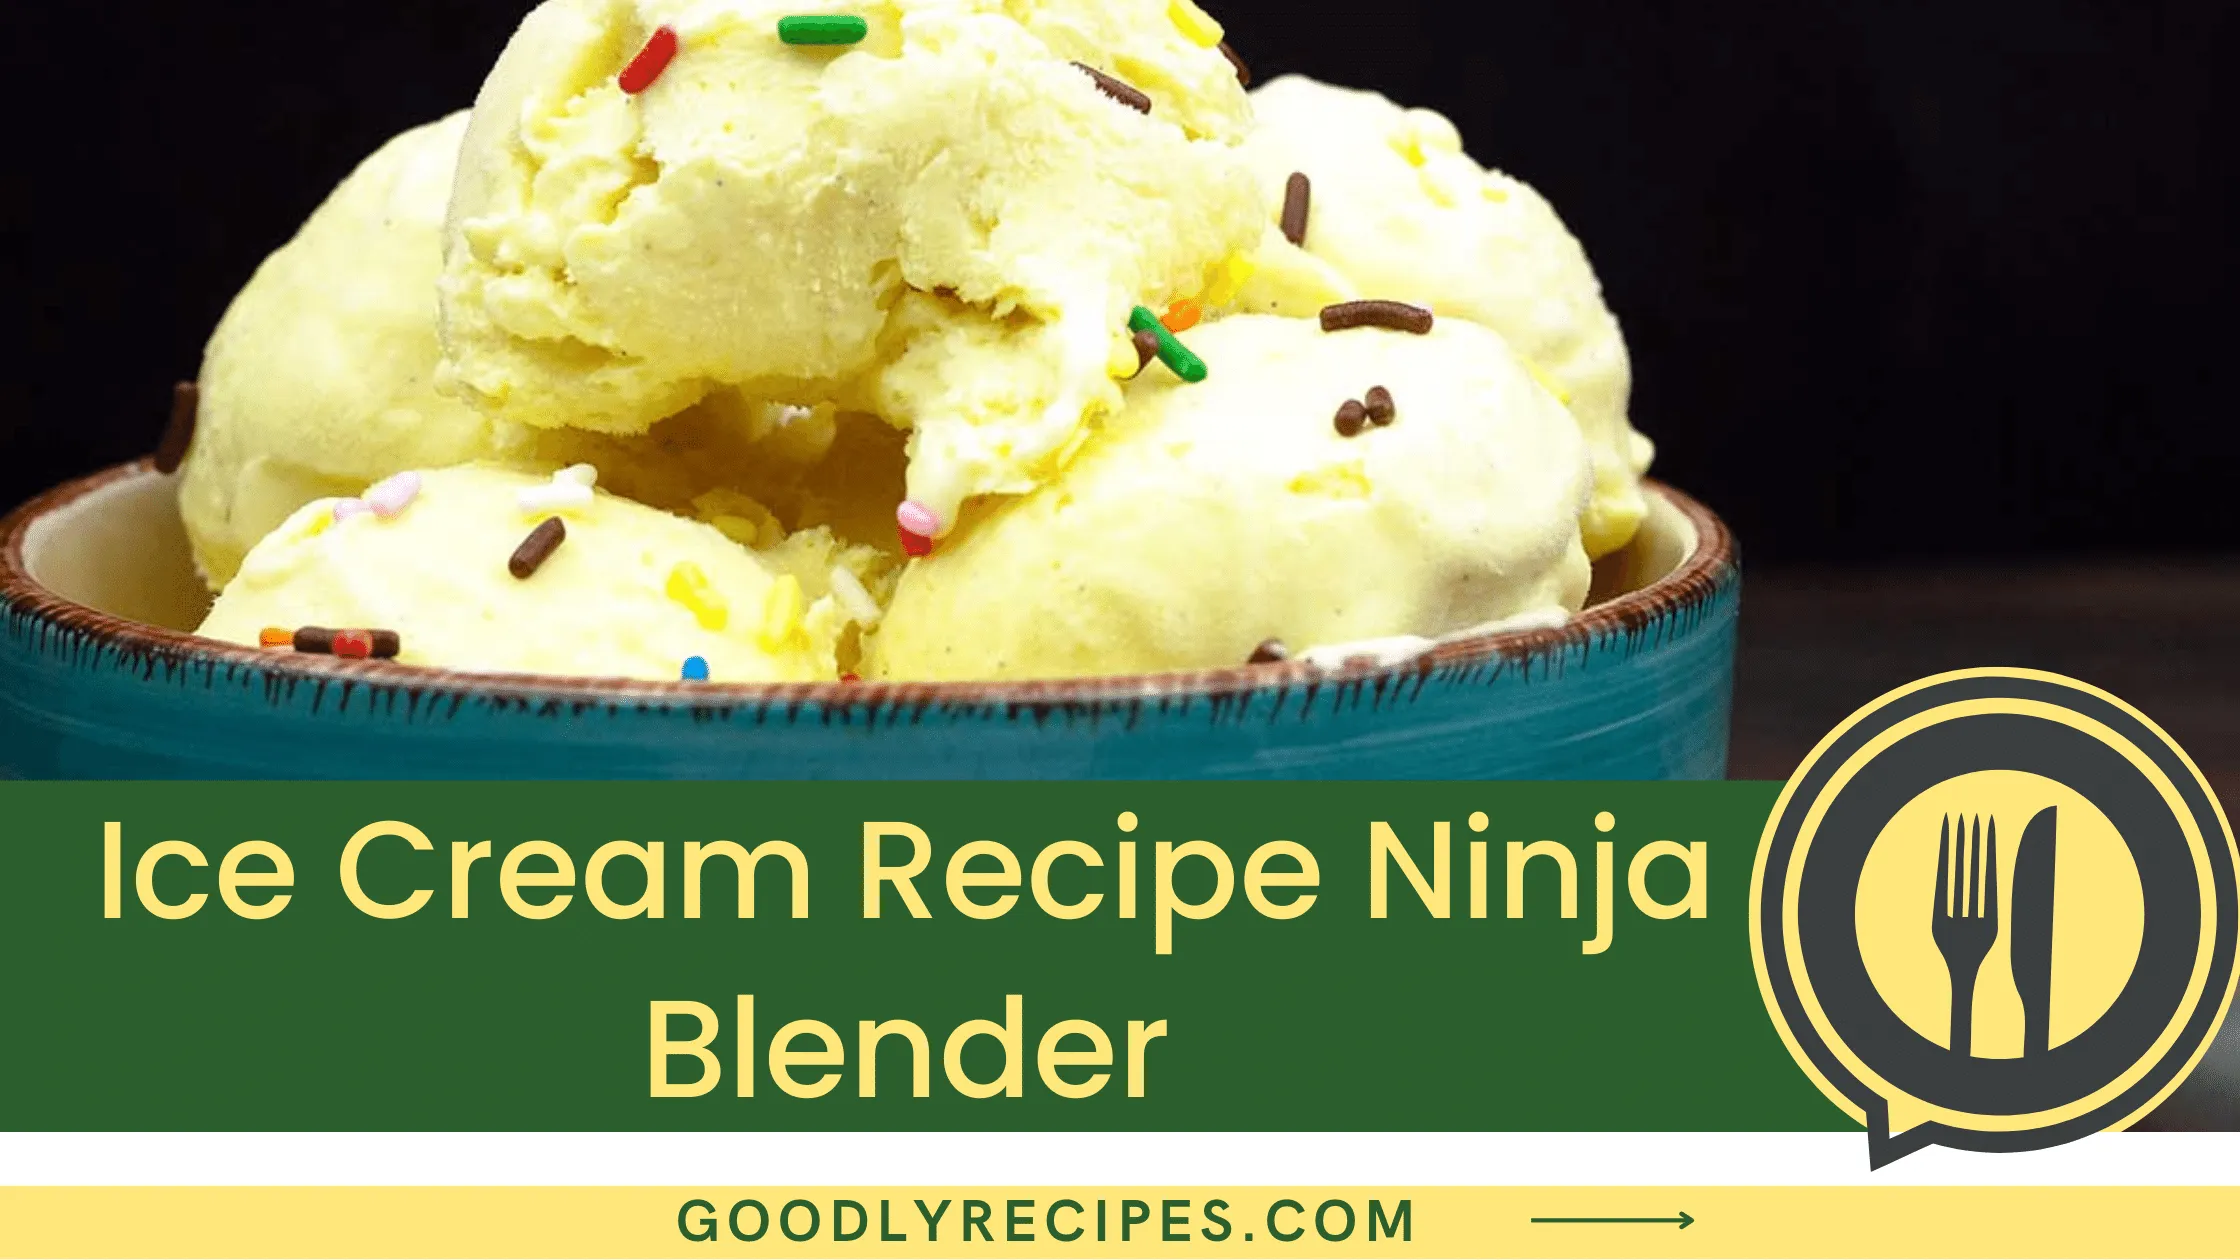 What Is Ice Cream Ninja Blender?